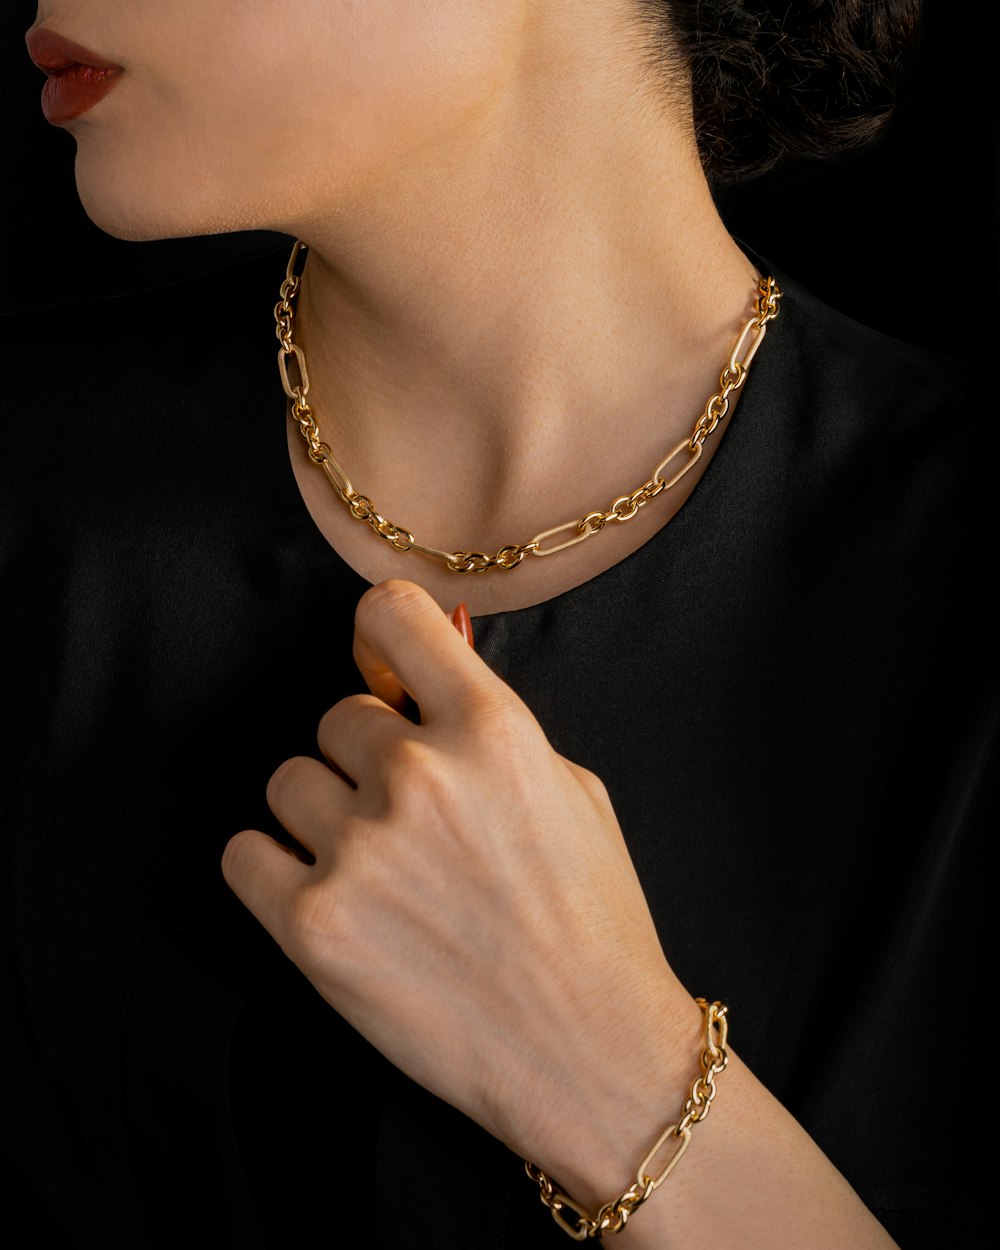 Eine Frau trägt ein goldenes Kettenarmband